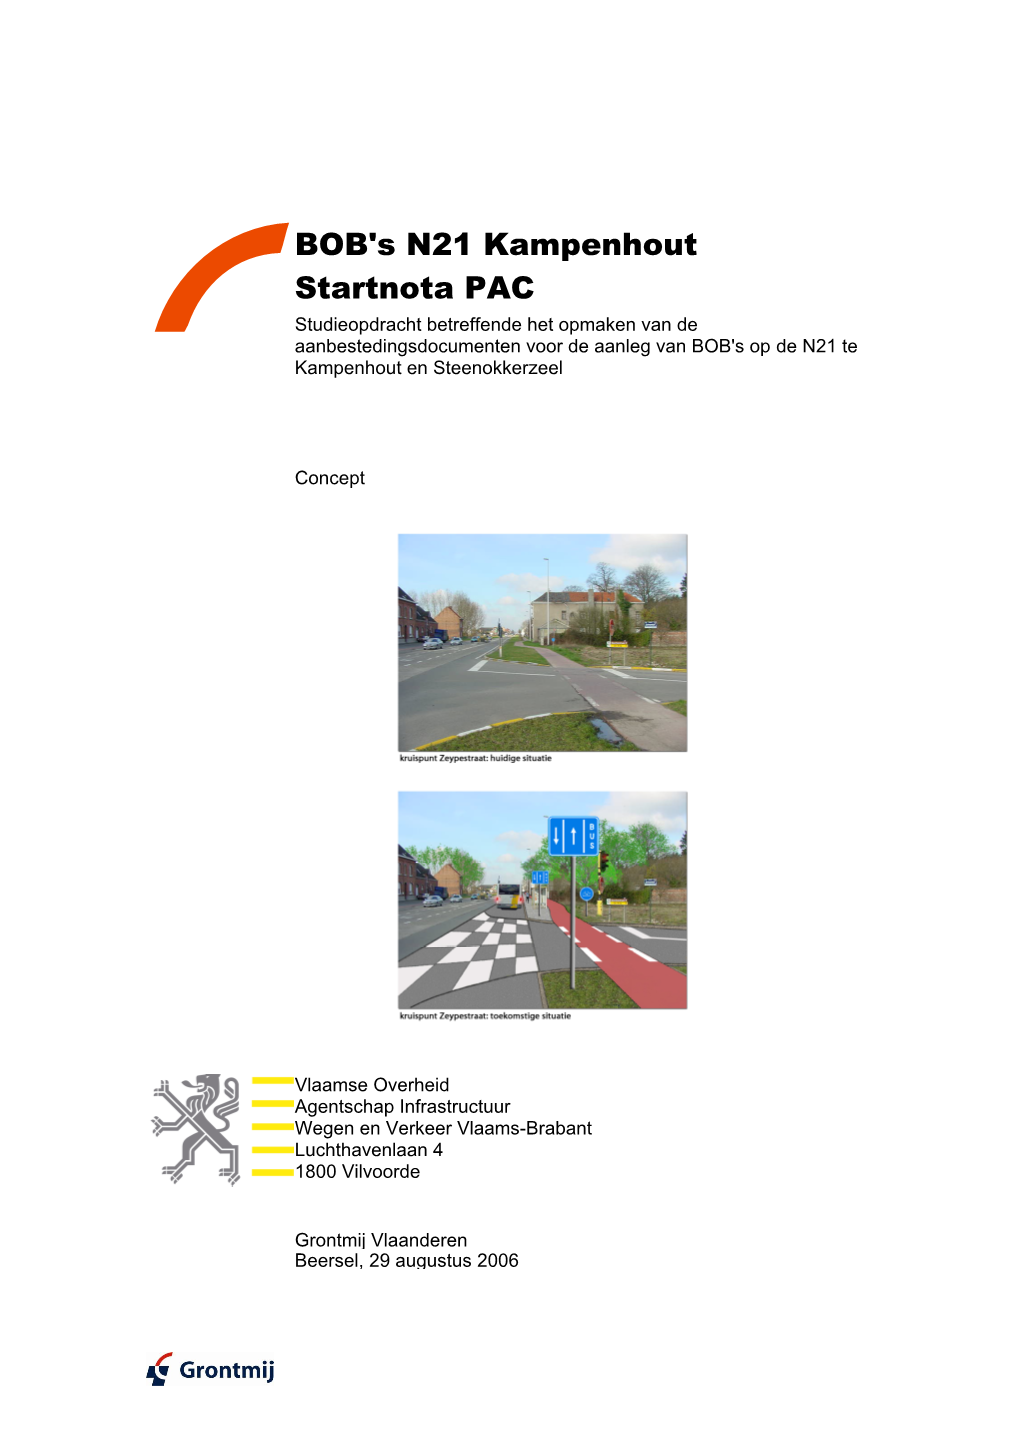 BOB's N21 Kampenhout Startnota